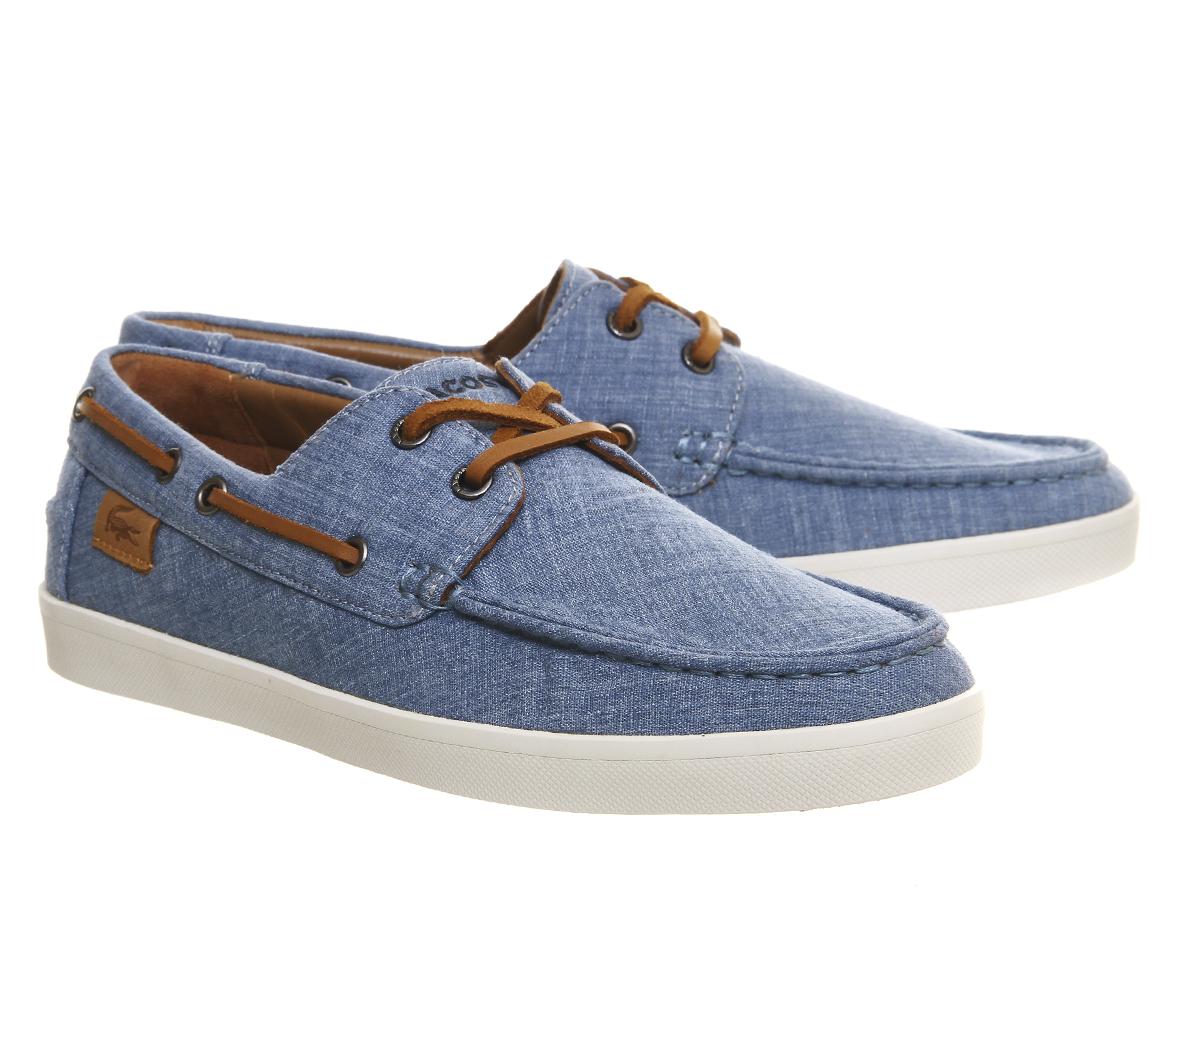 Lacoste Canvas Keellson Boat Shoes in Blue for Men - Lyst